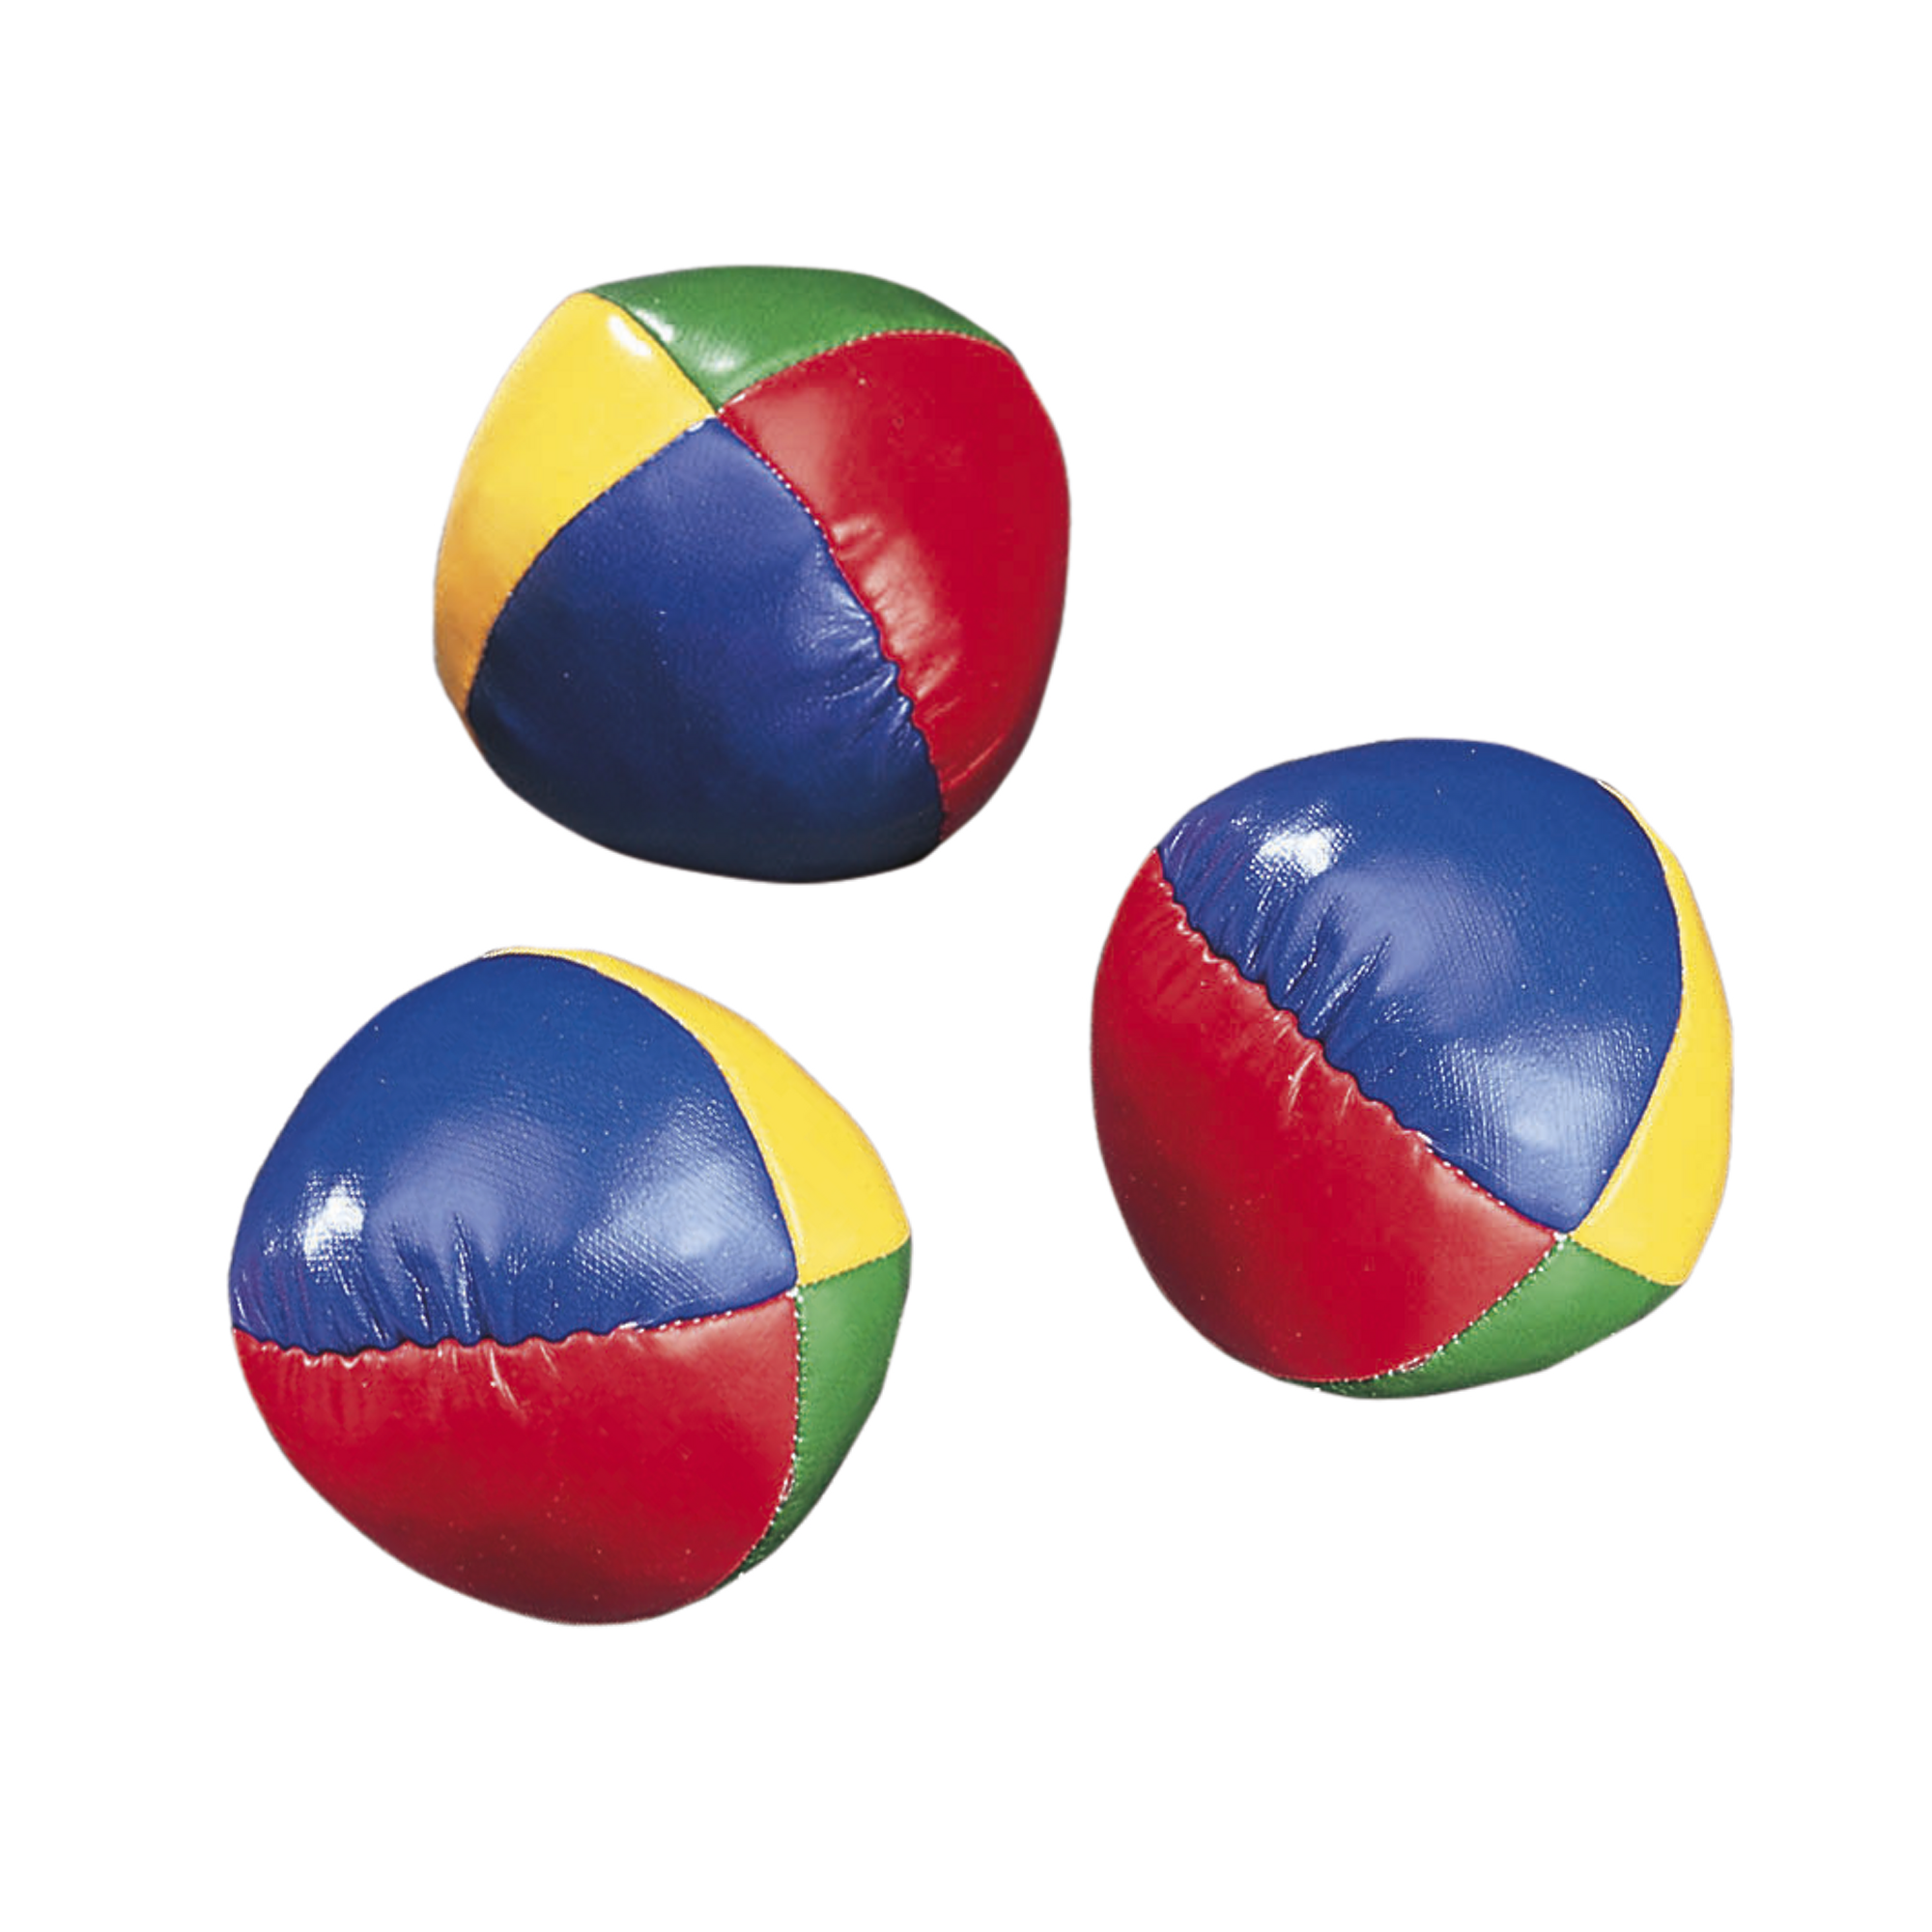 Bean Balls - Juggling Balls